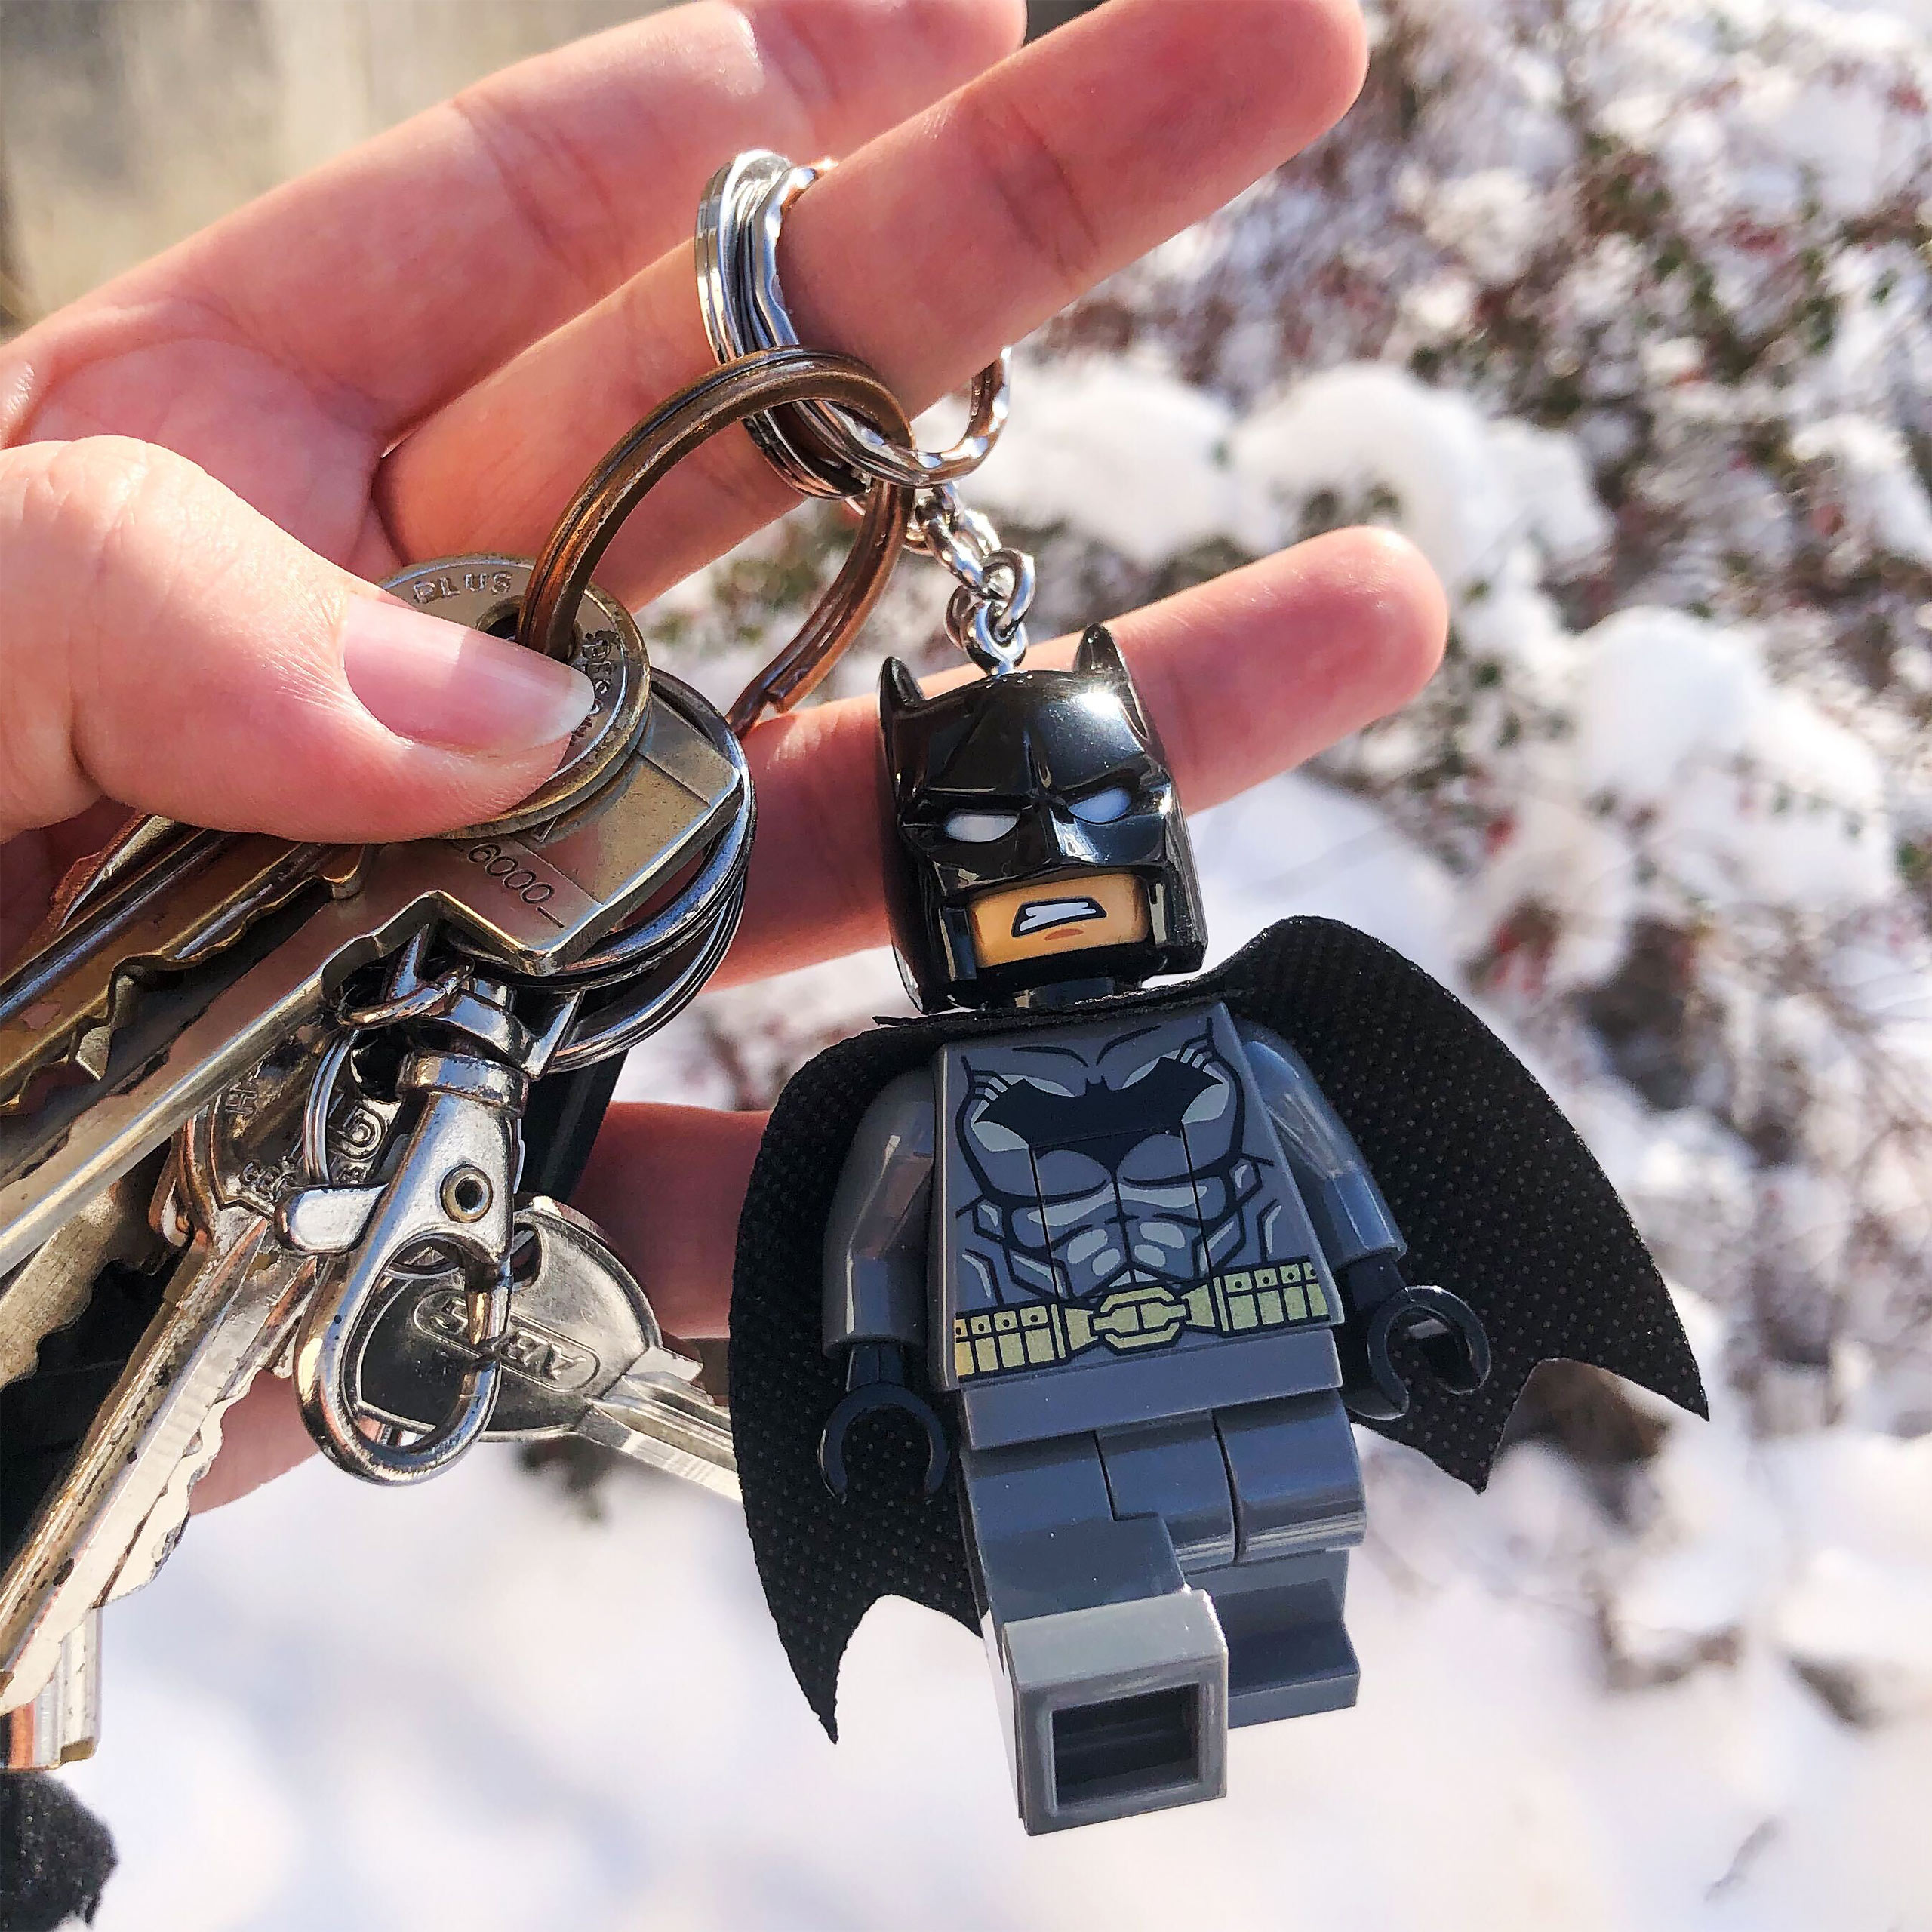 Batman - Super Heroes LEGO Porte-clés avec lumière